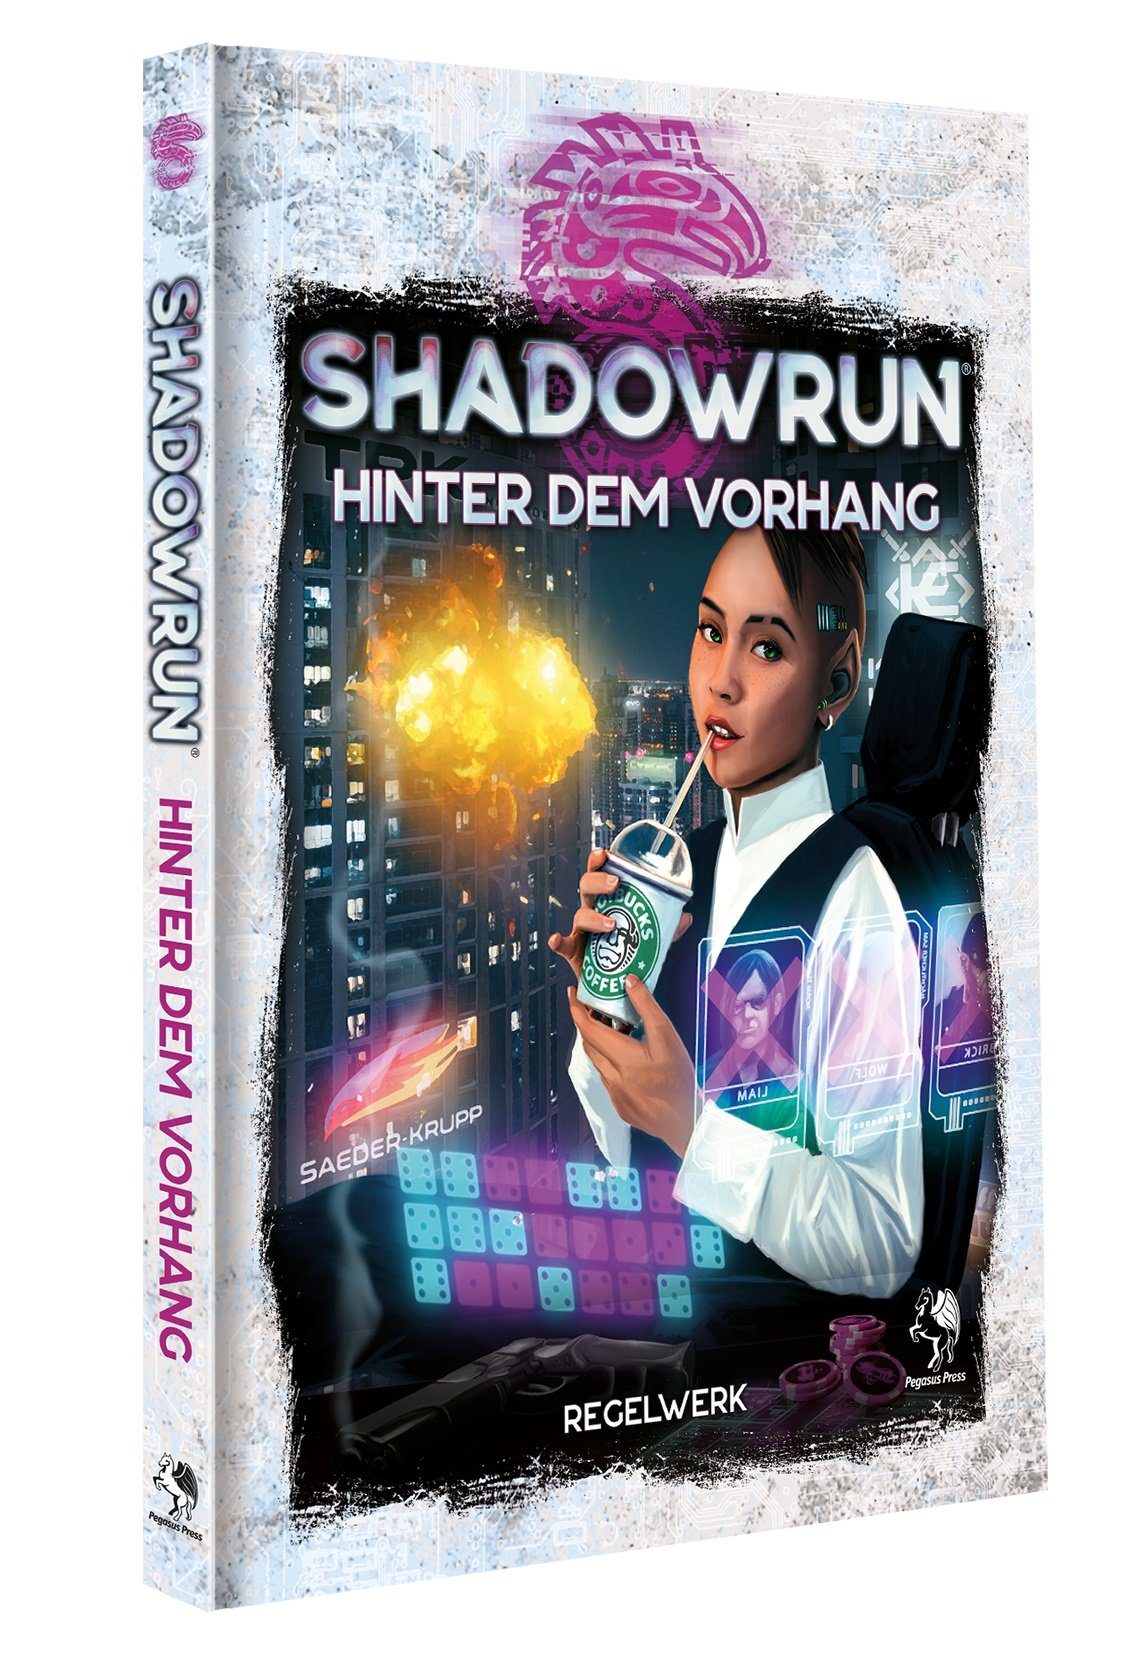 Pegasus Spiele Vorhang Hinter Shadowrun: Verbandbuch dem (Hardcover)